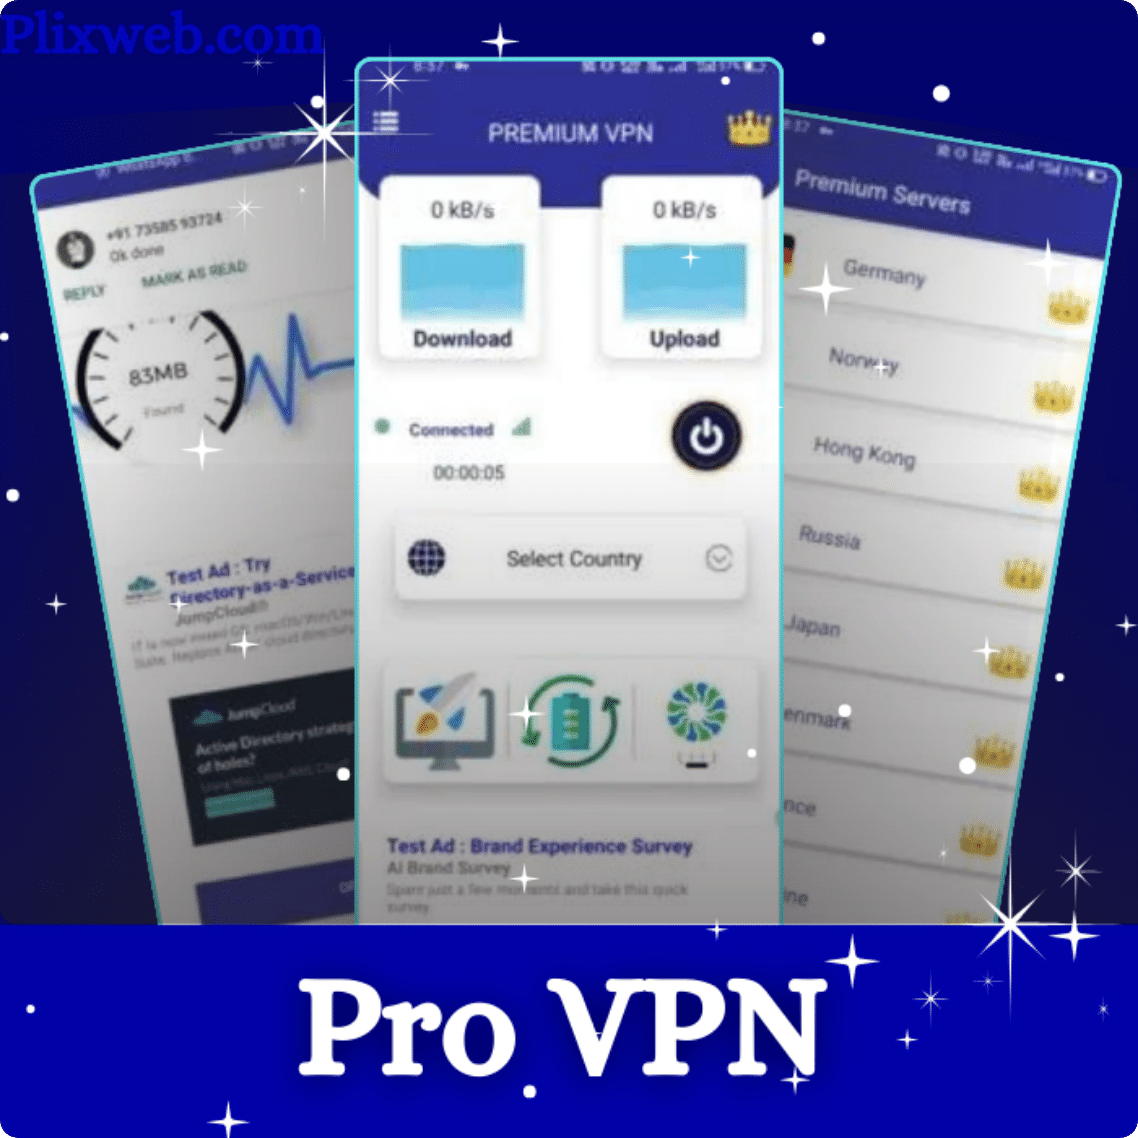 Pro VPN Development